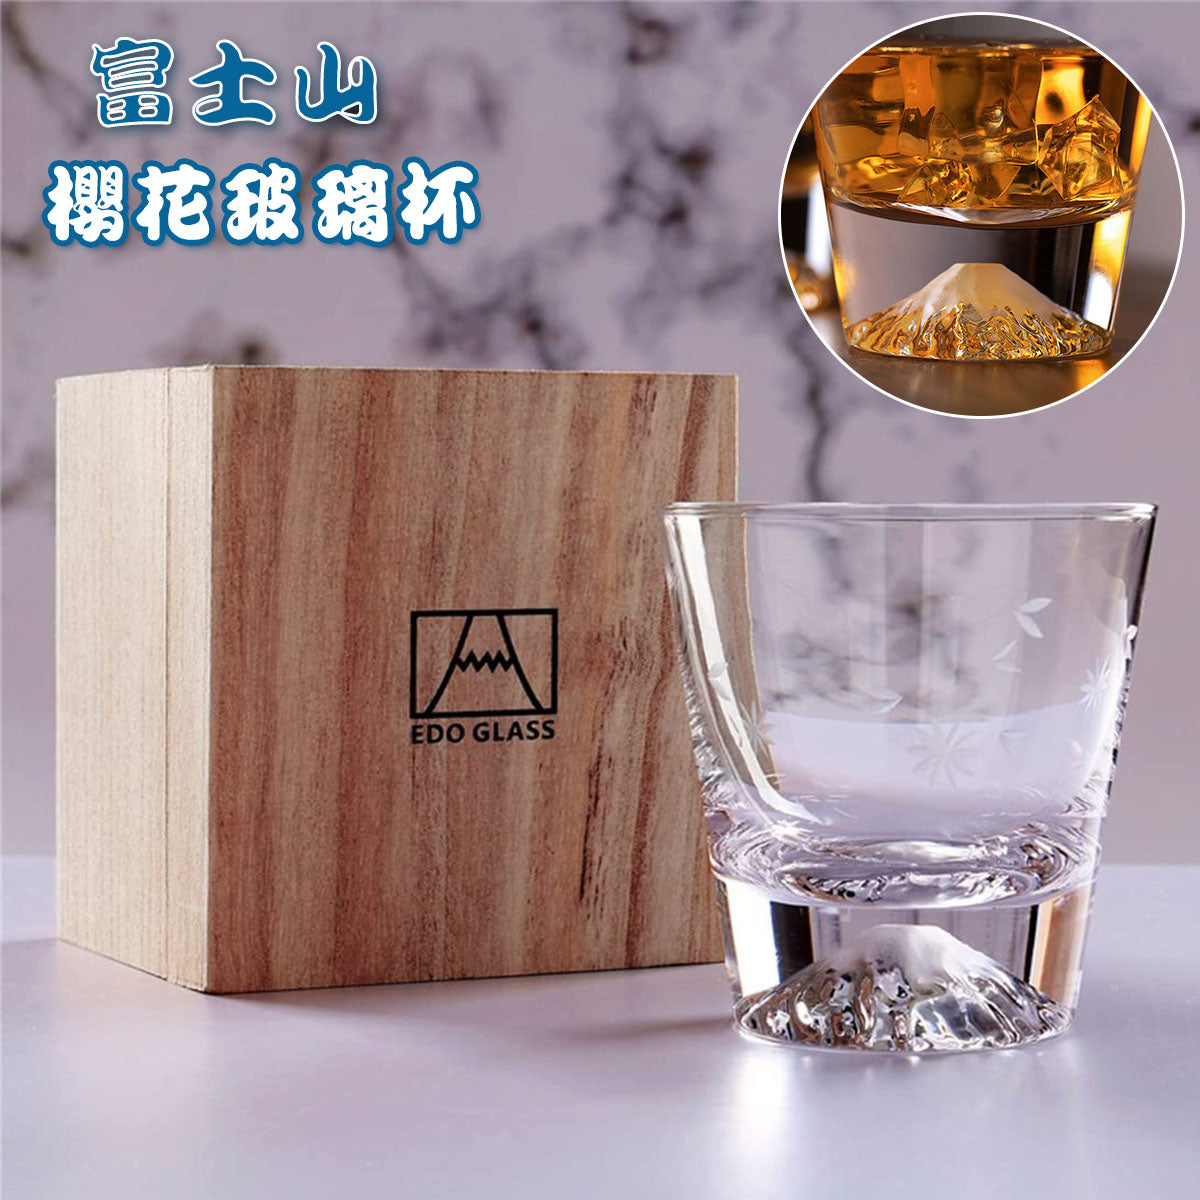 Glass - Japanese Style Mt. Fuji with Wood Box